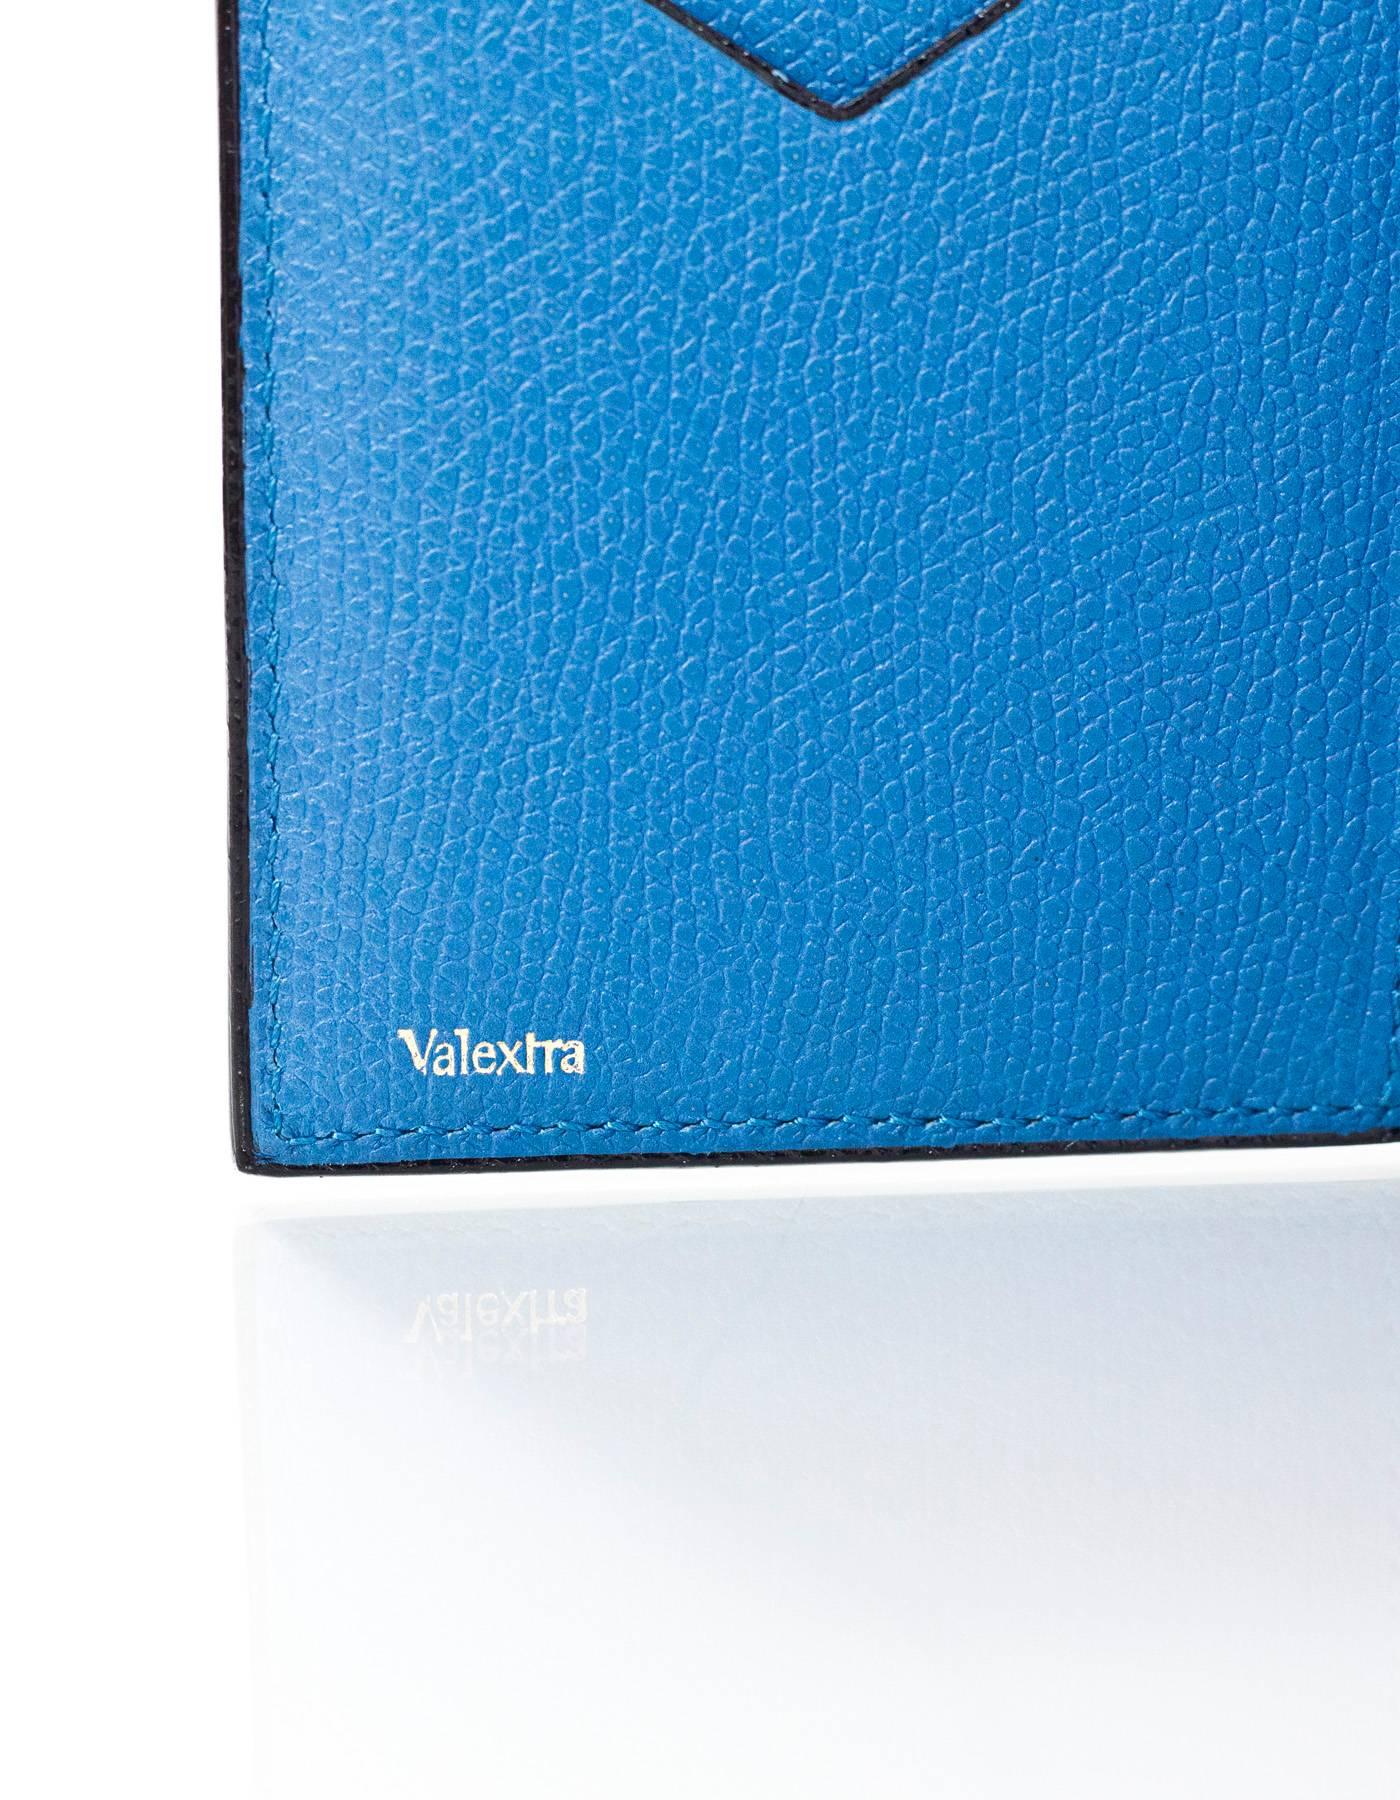 Women's Valextra Blue Asymmetrical Grained Leather Wallet NIB rt. $795